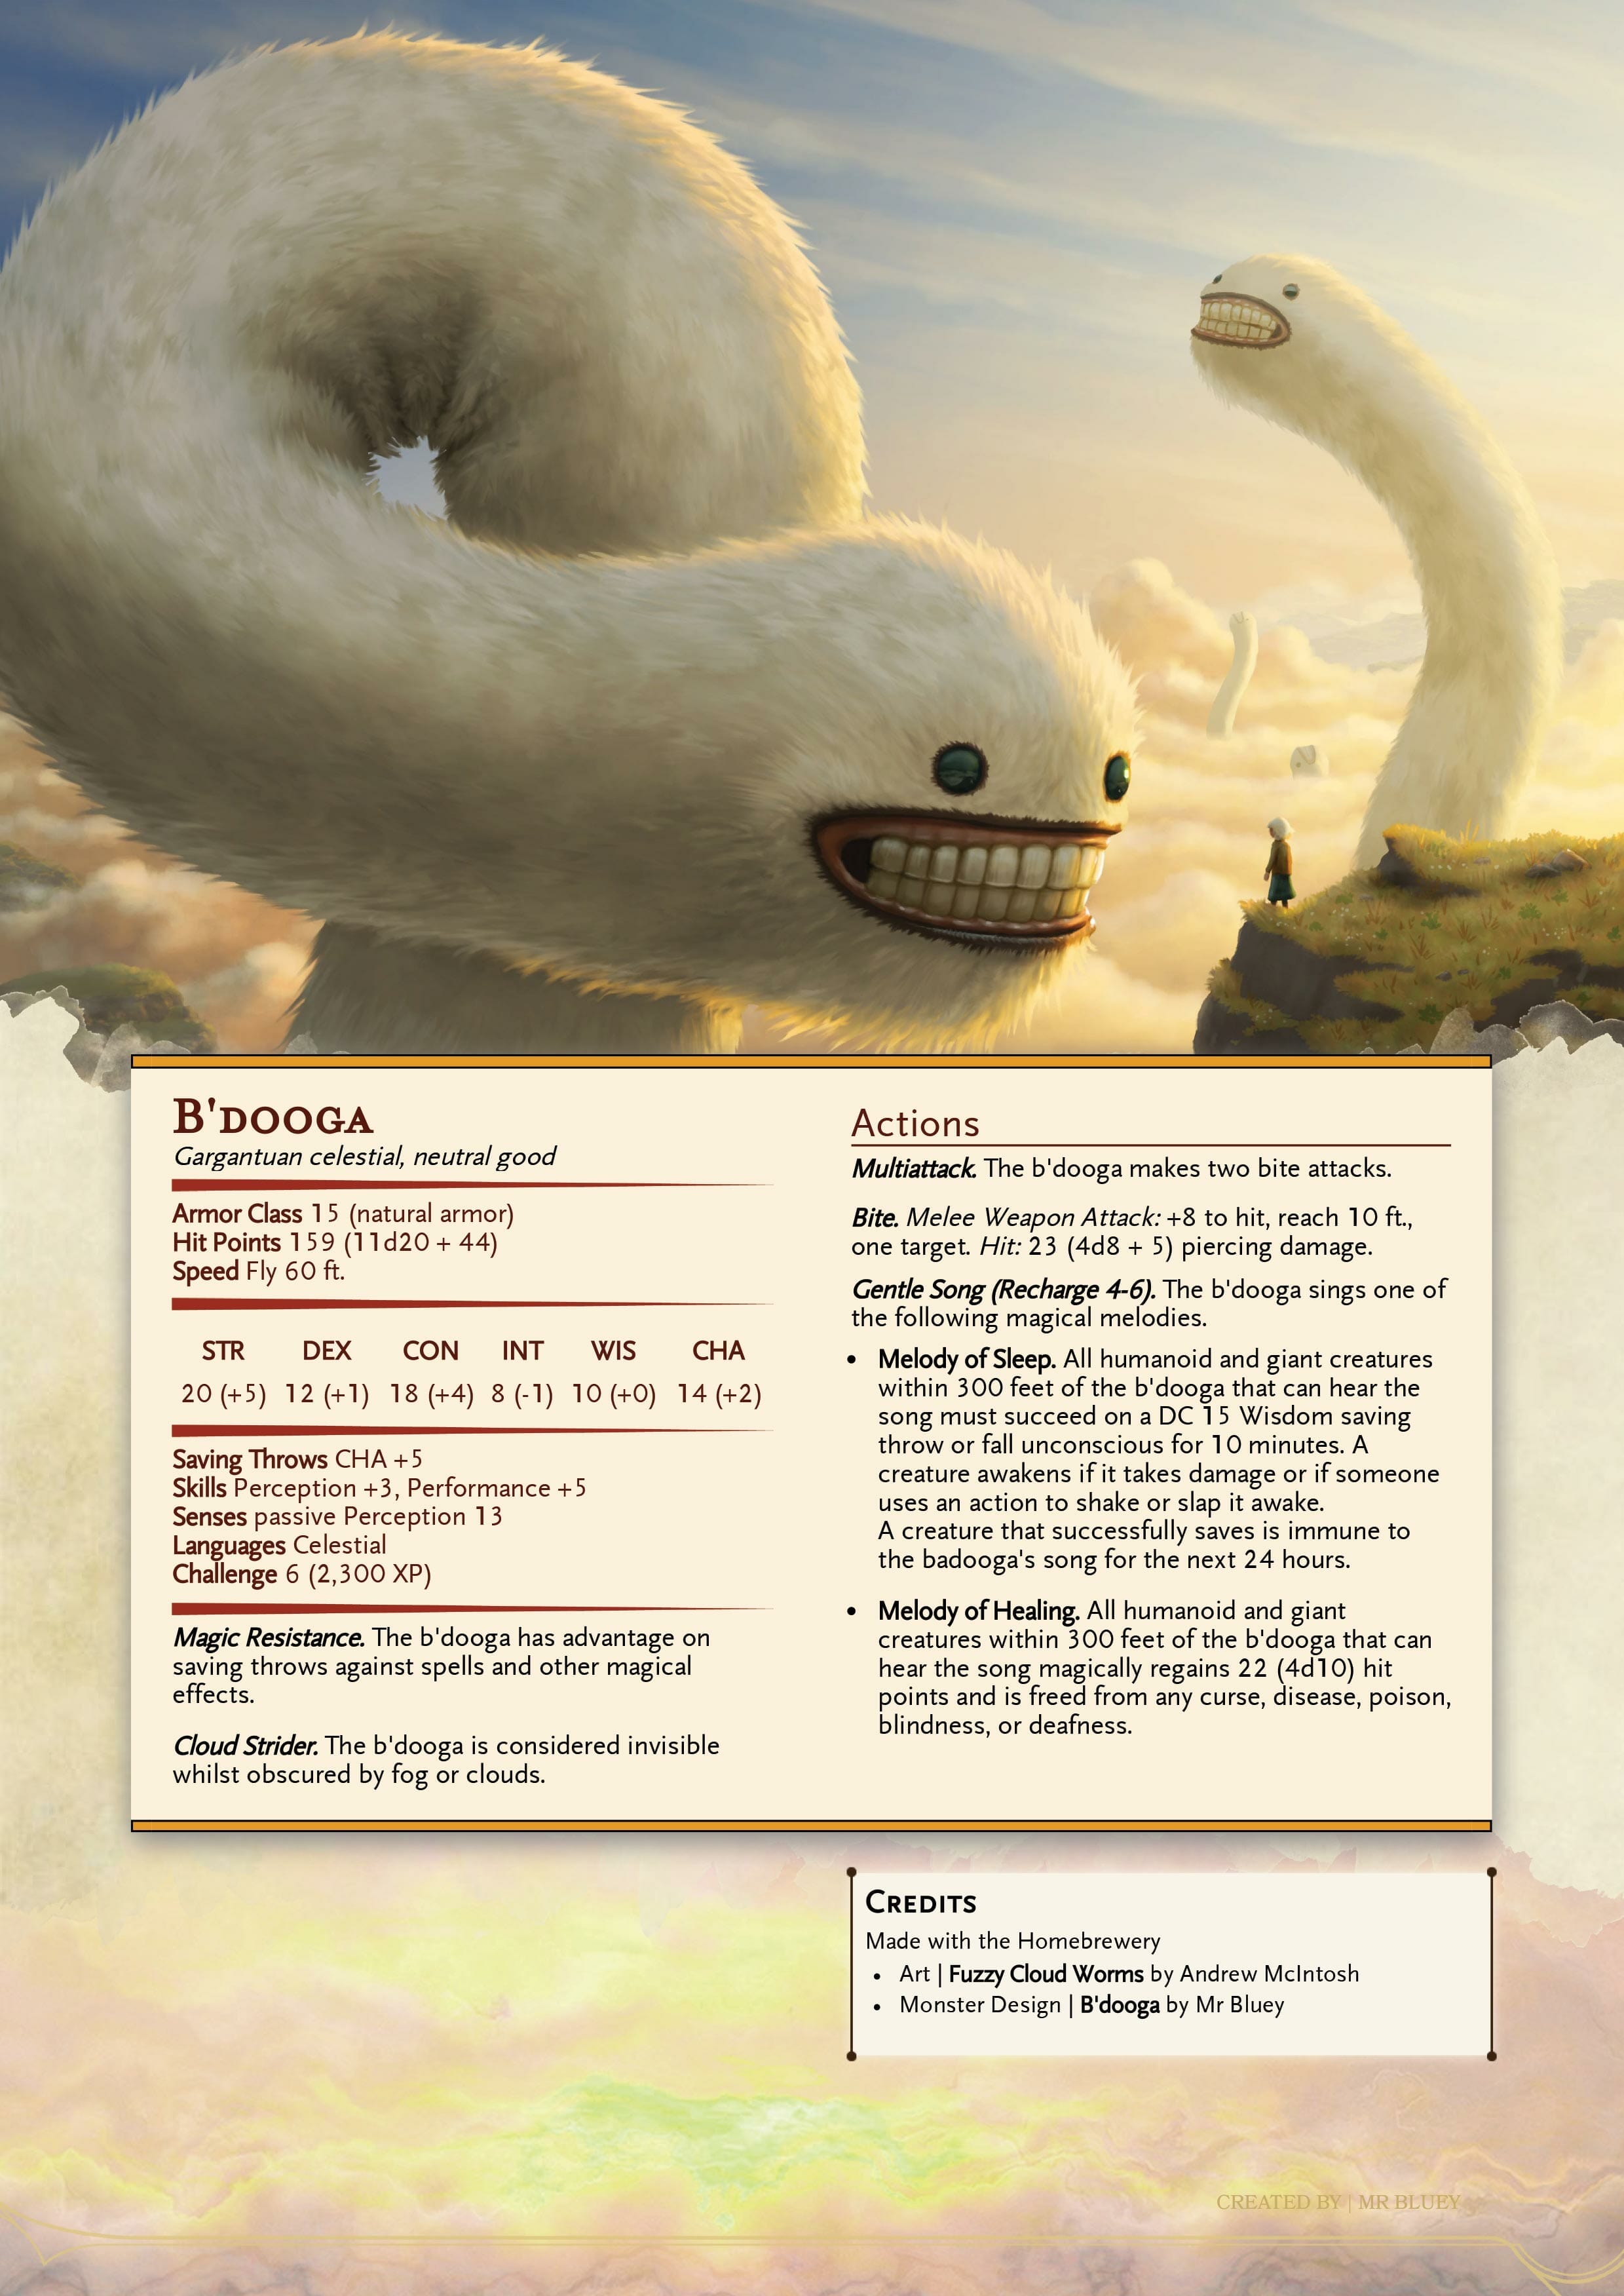 B'Dooga are giant fuzzy worms.